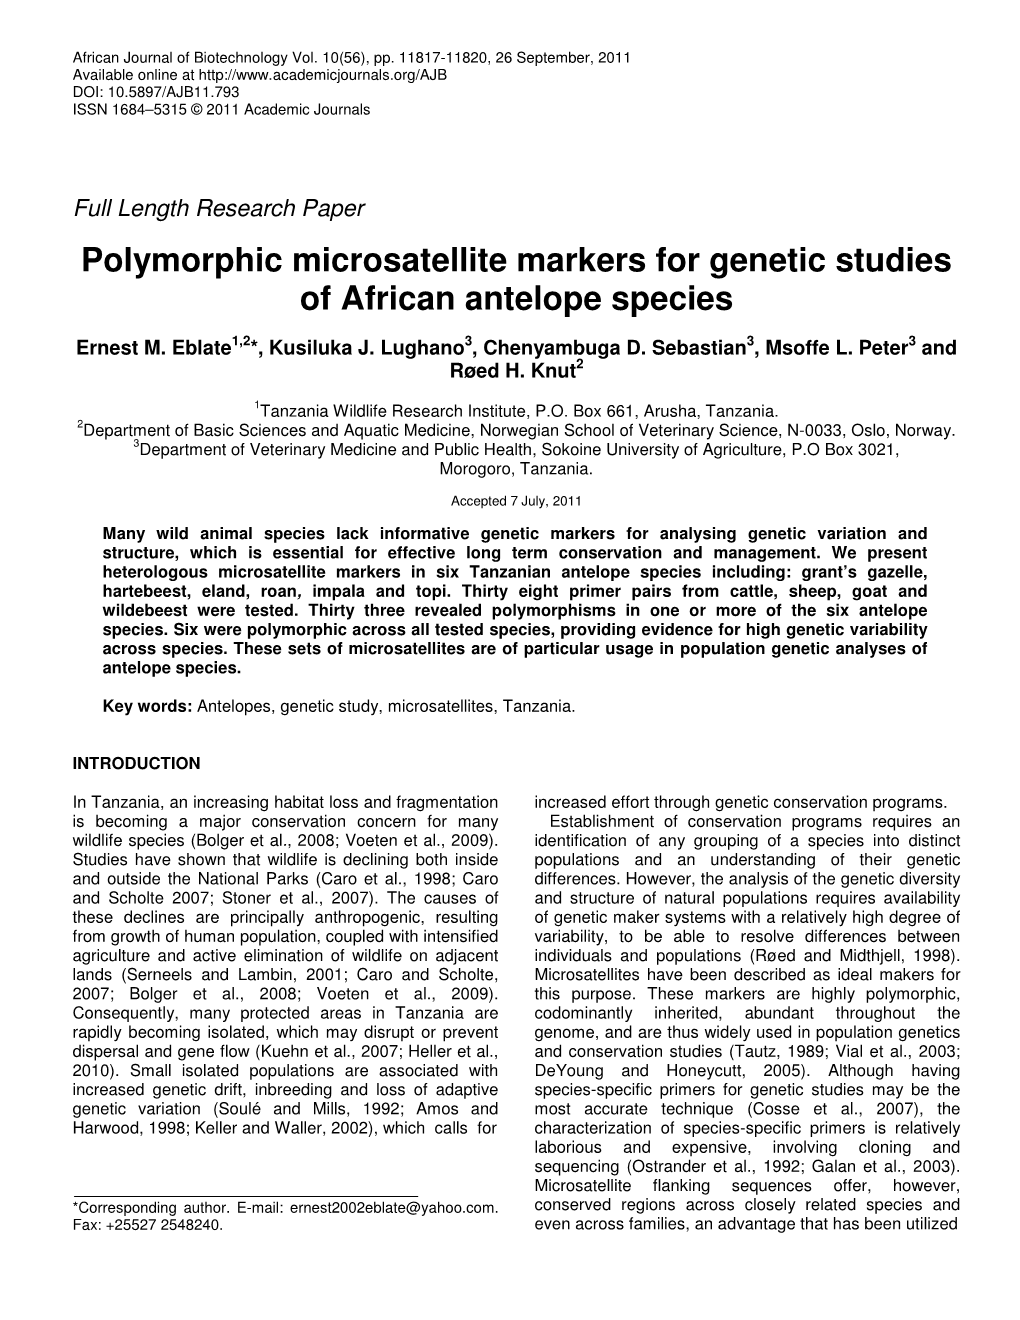 Polymorphic Microsatellite Markers for Genetic Studies of African Antelope Species